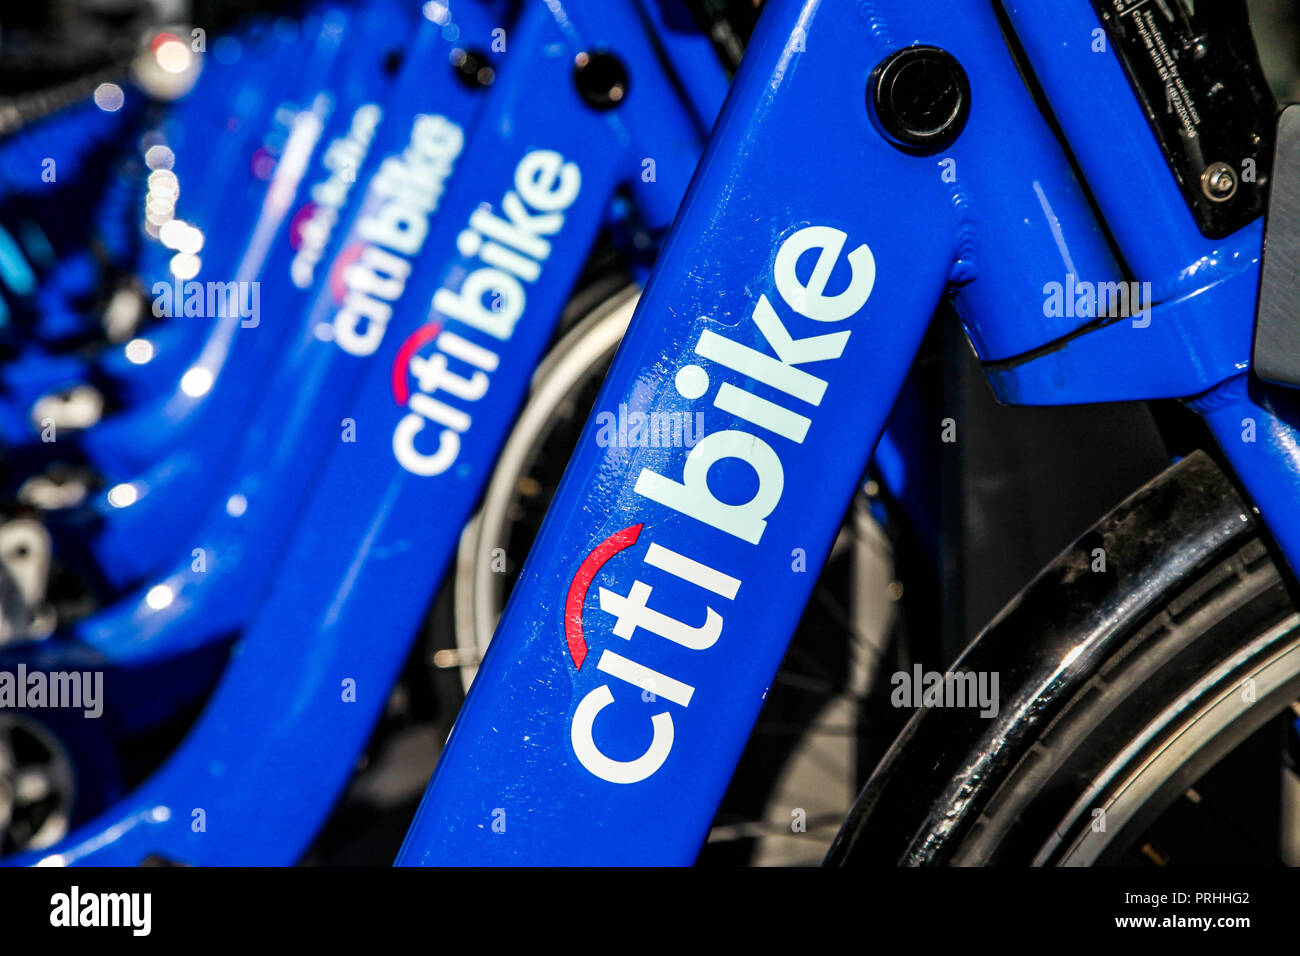 NEW YORK-NOVEMBER 6: New blue Citi Bikes lined up near Madison Square Garden at 8th Avenue in Manhattan on November 6, 2013. The Bike-Share program. Stock Photo